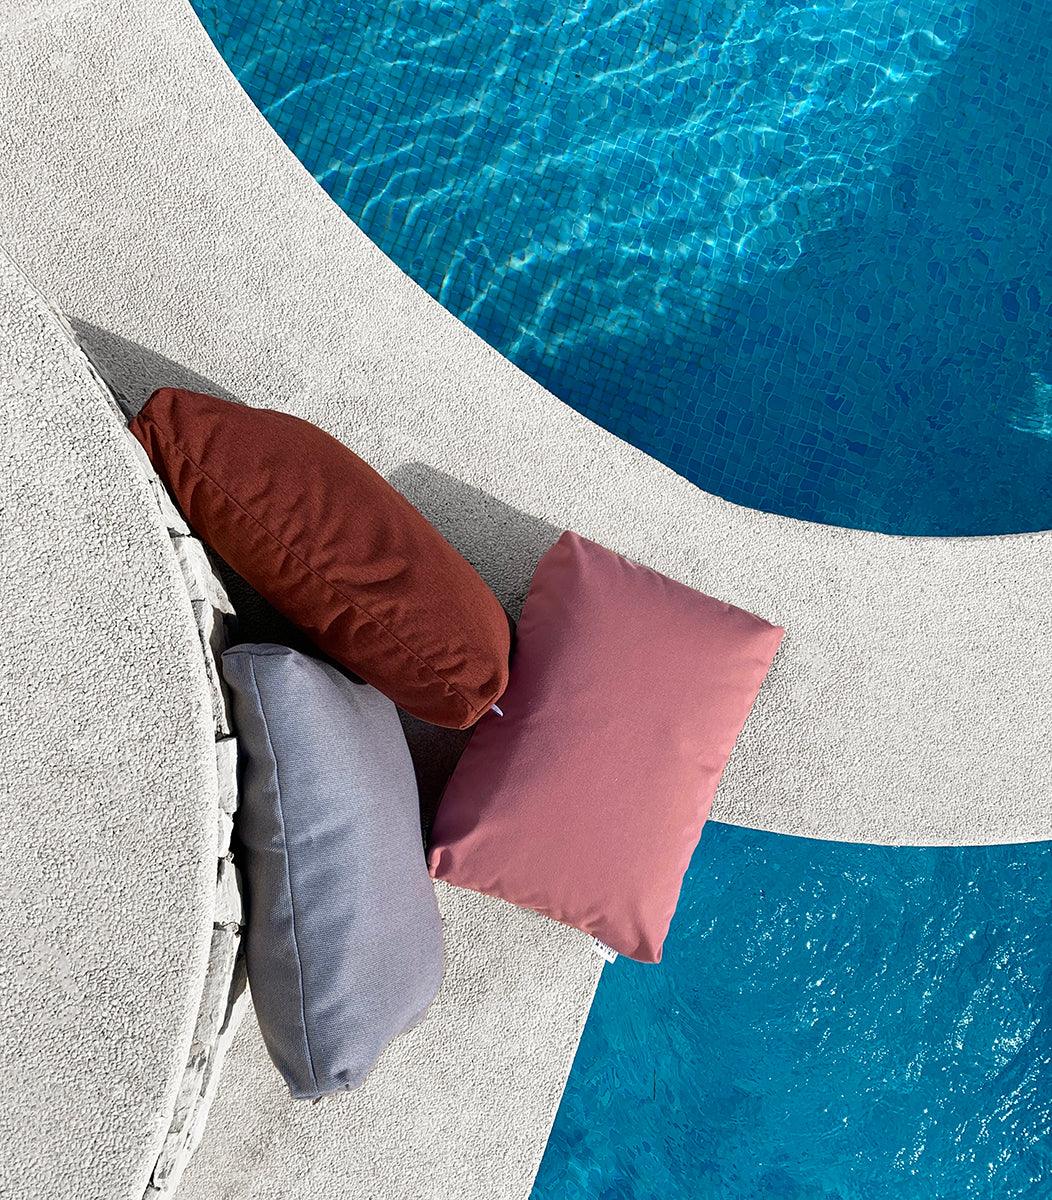 Rectangular Outdoor Cushion - WOO .Design